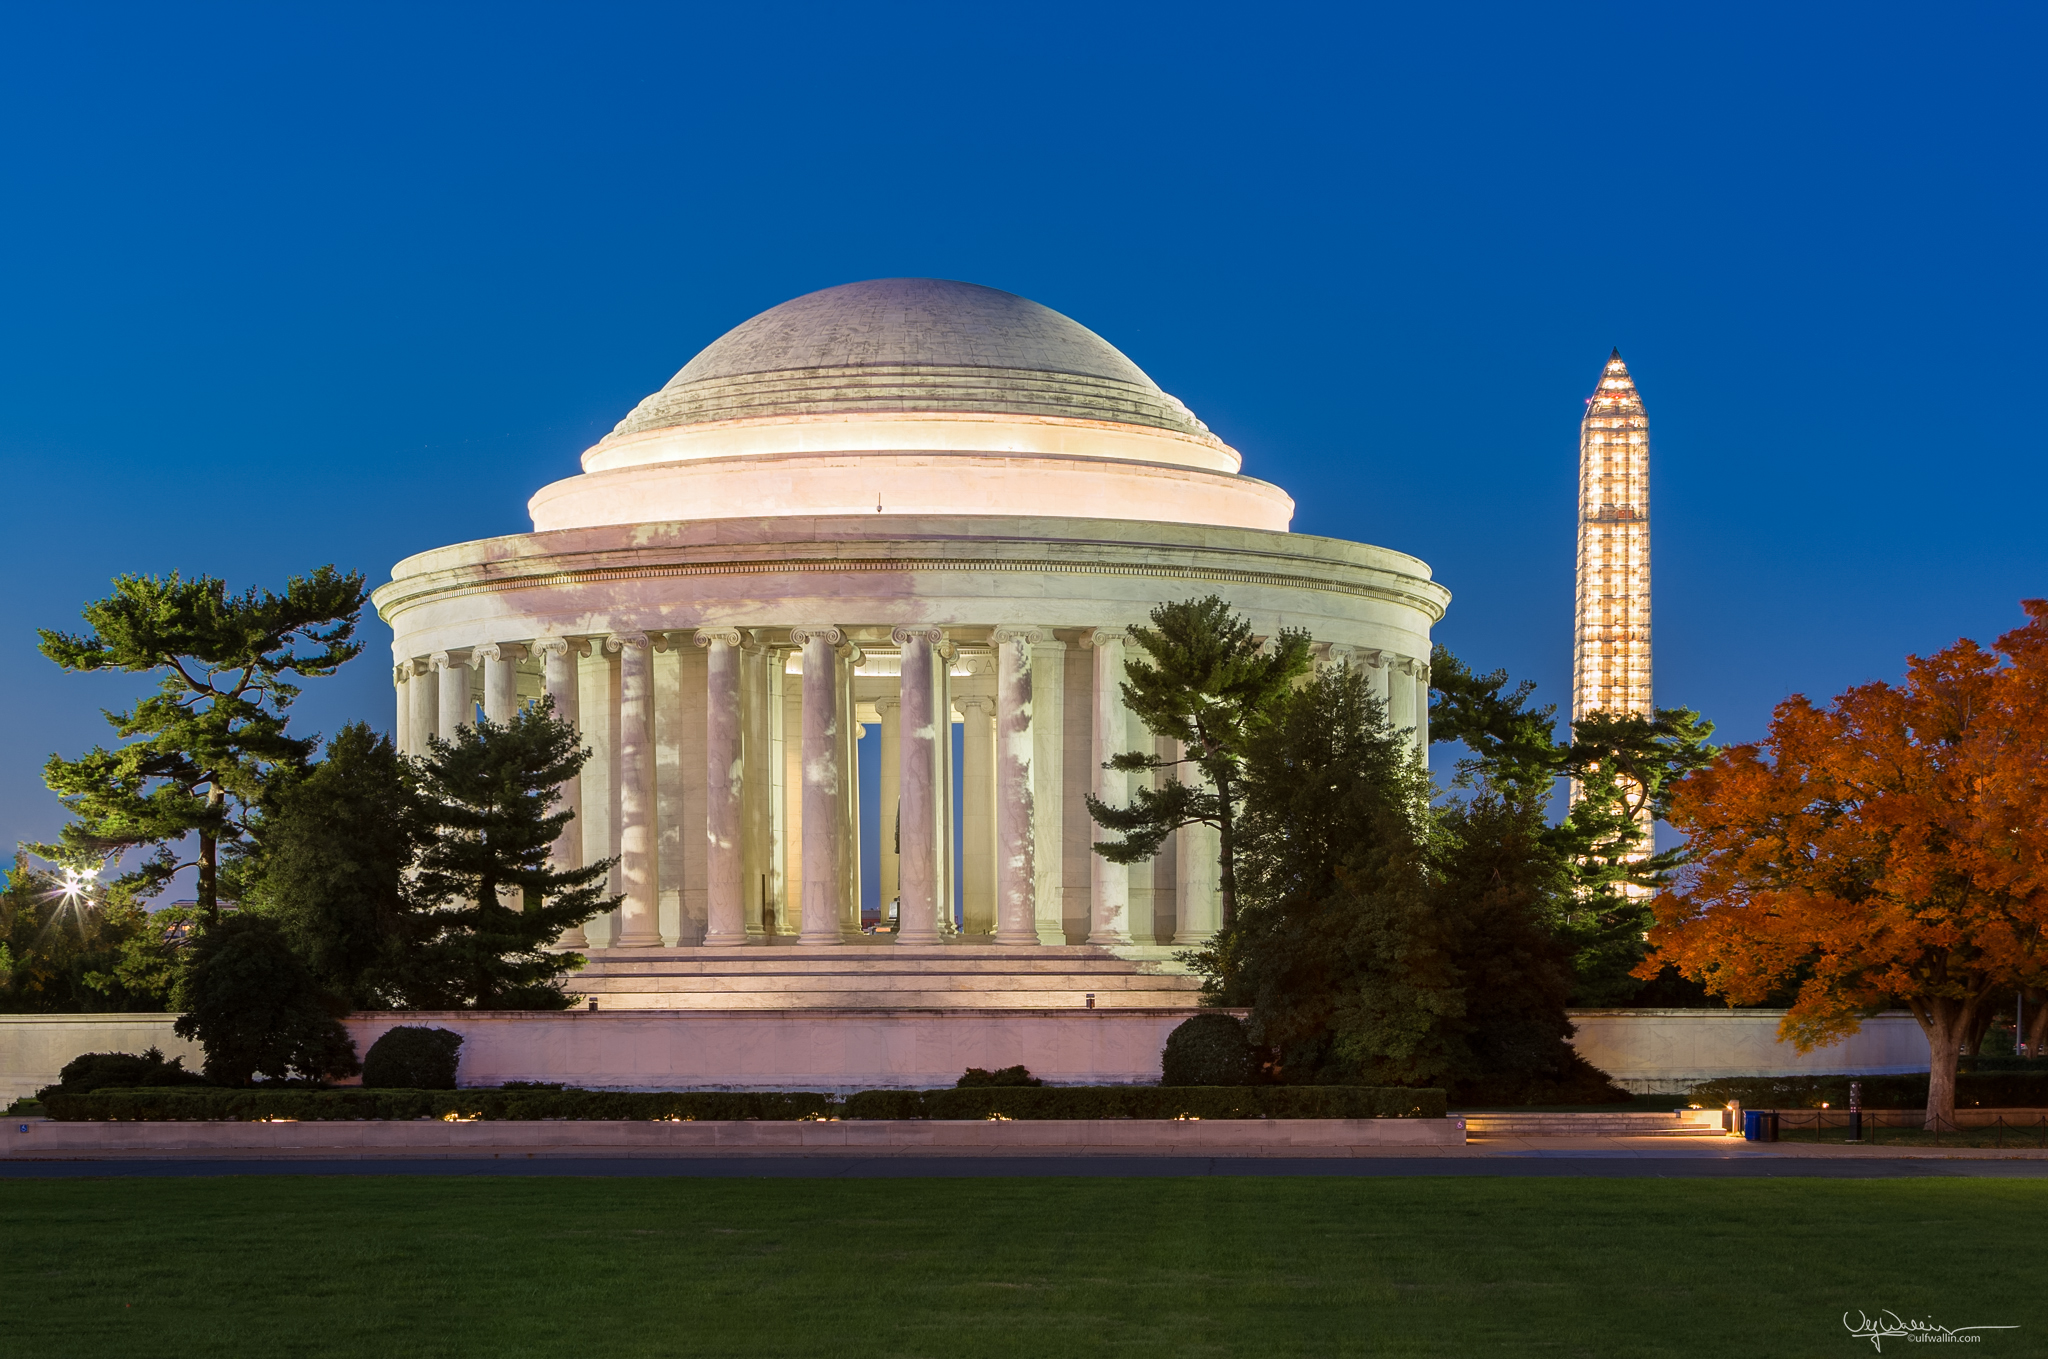 Jefferson Memorial and Washington Monument